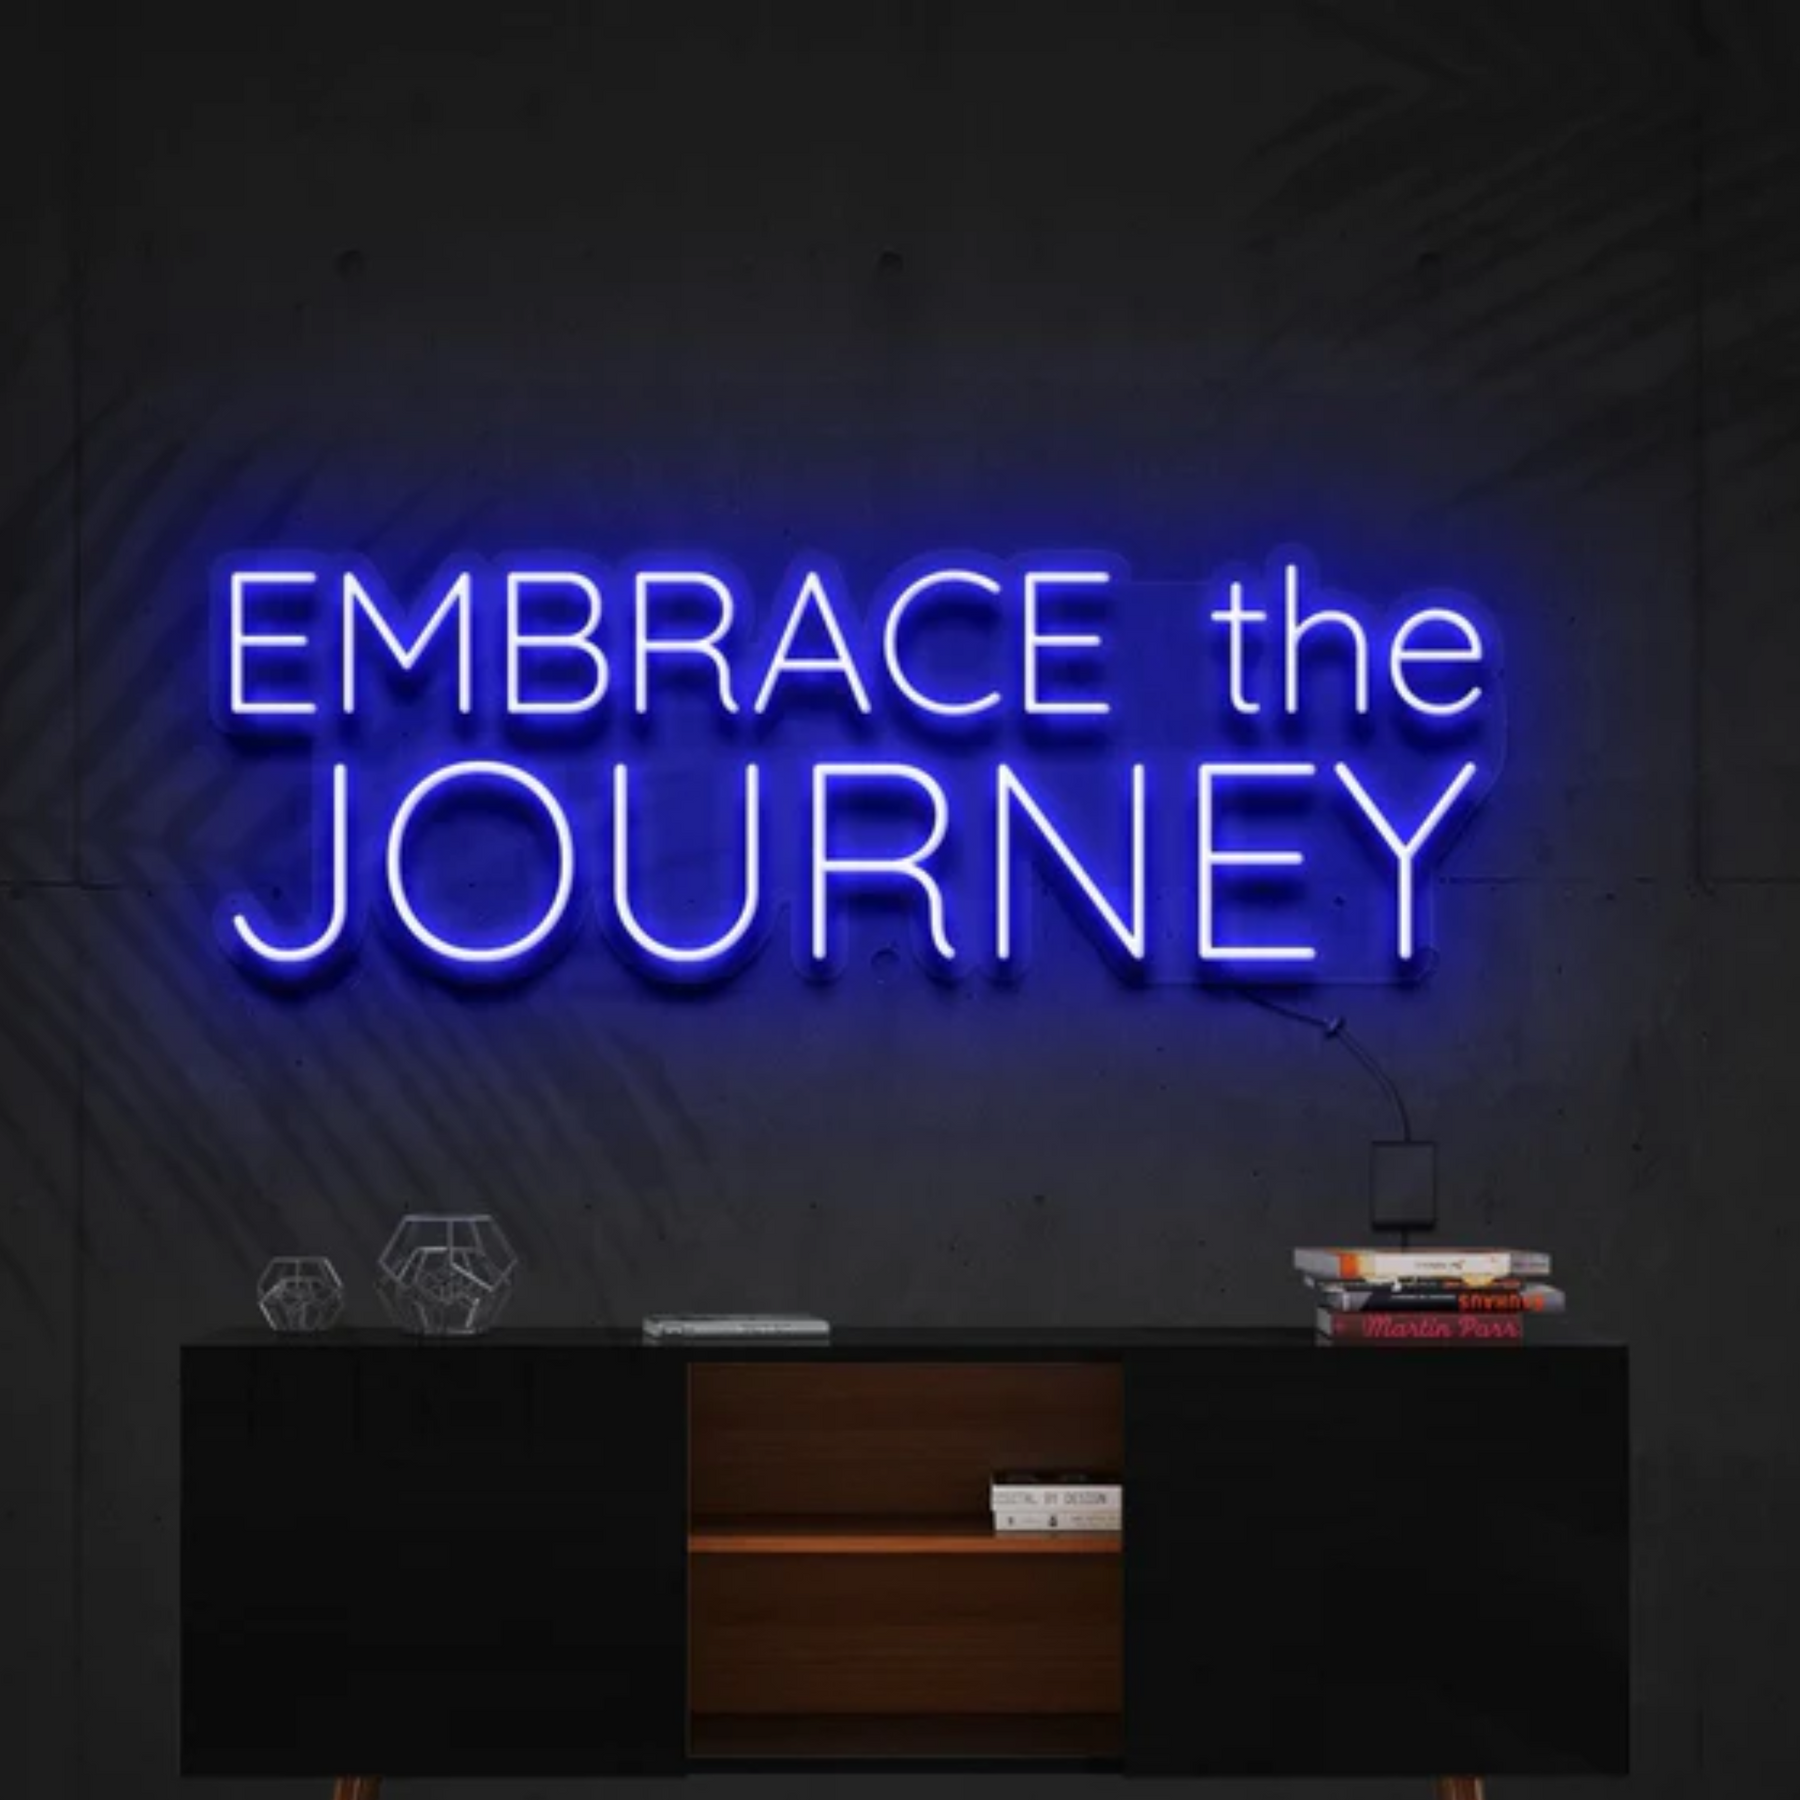 Embrace The Journey